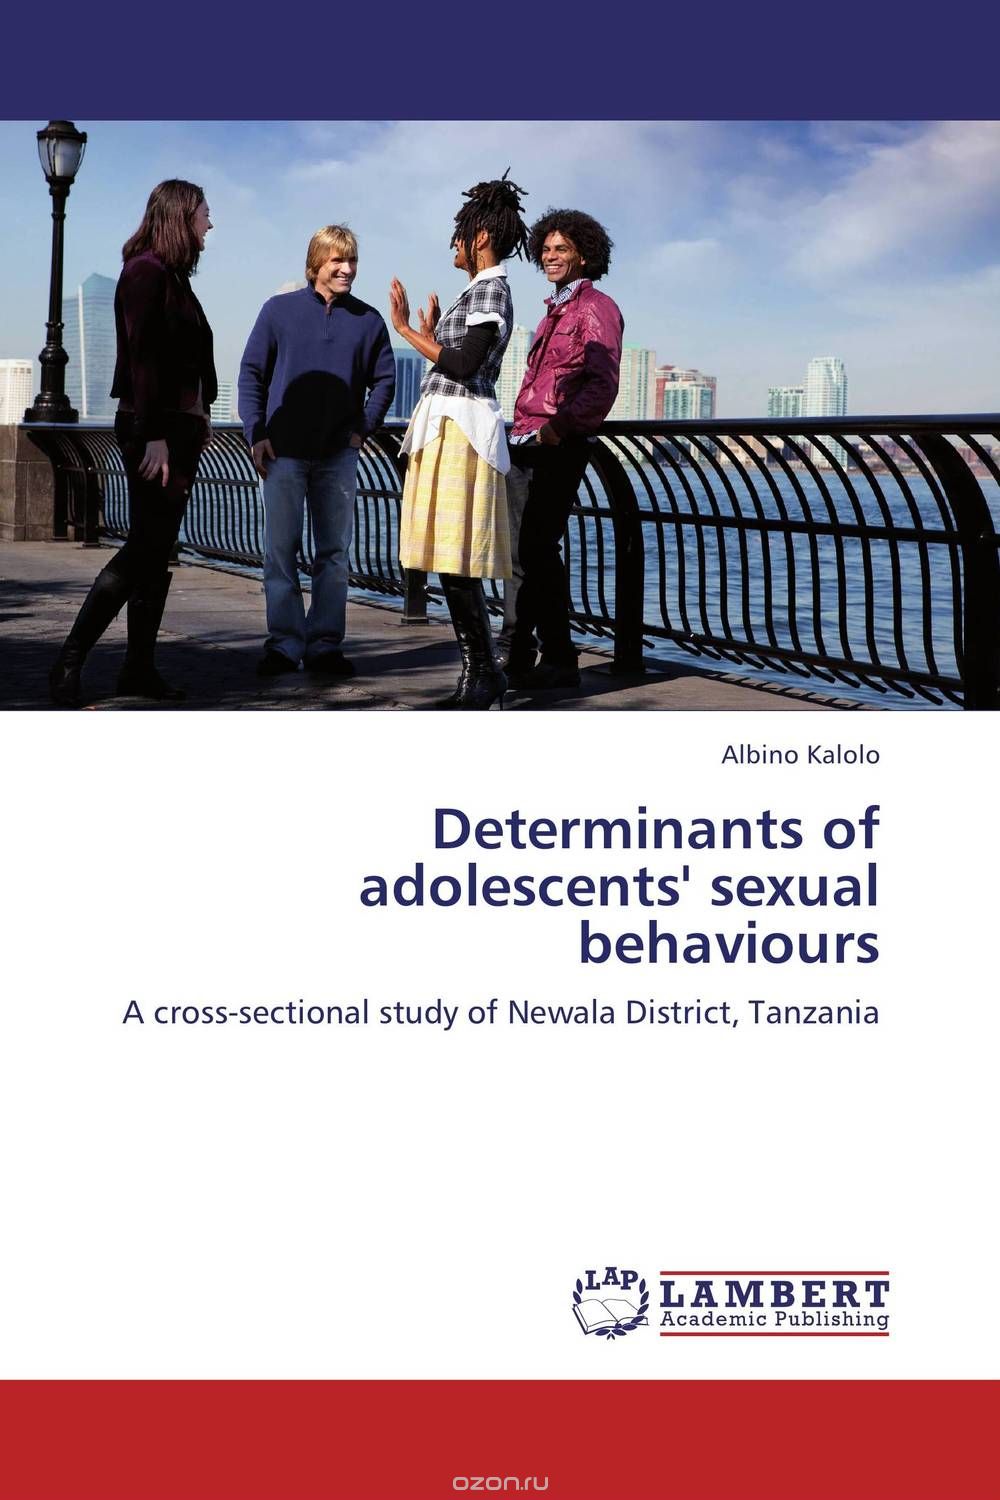 Скачать книгу "Determinants of adolescents' sexual behaviours"